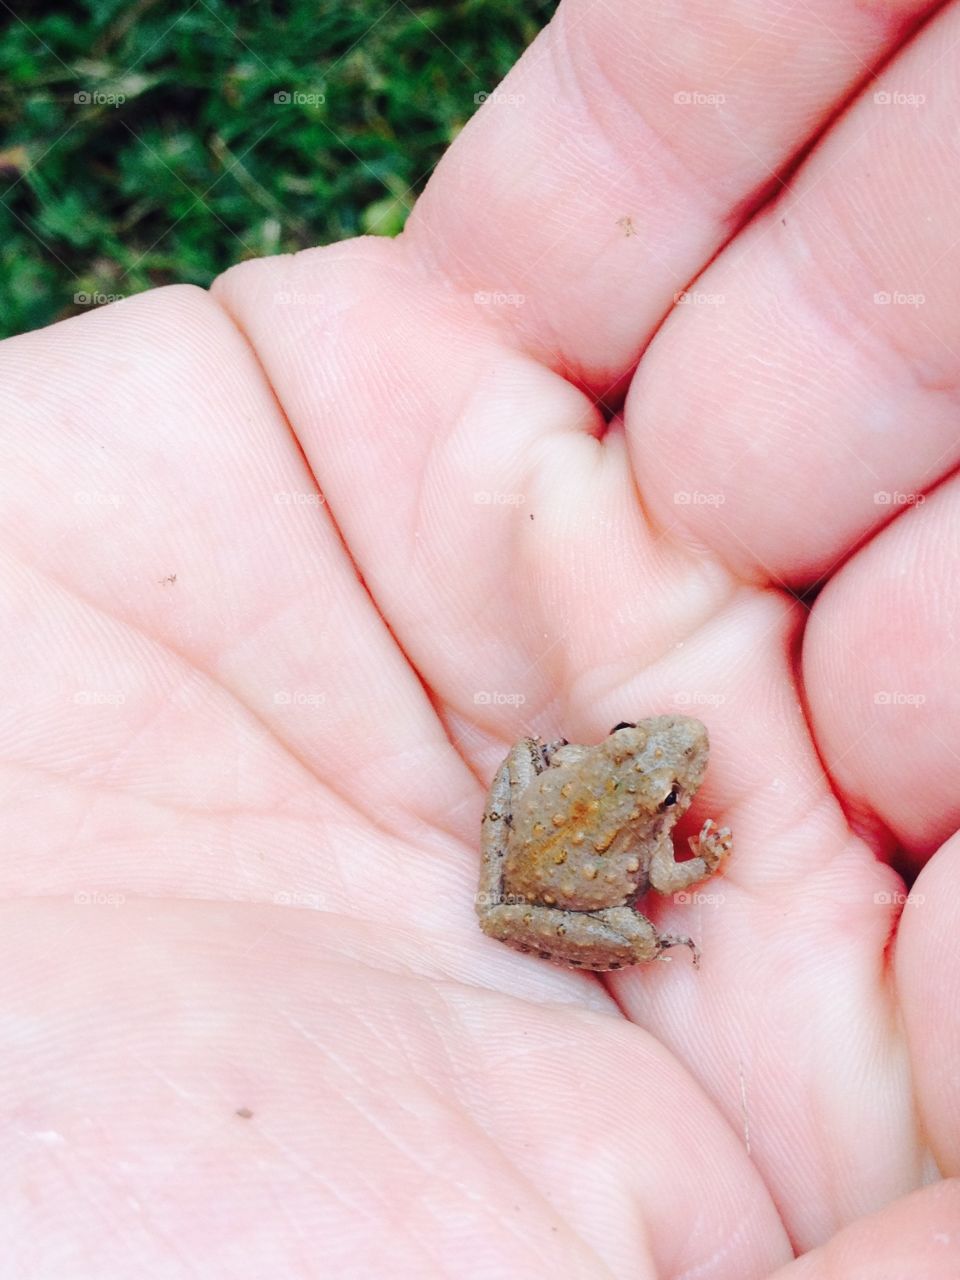 Tiny frog in Illinois!
